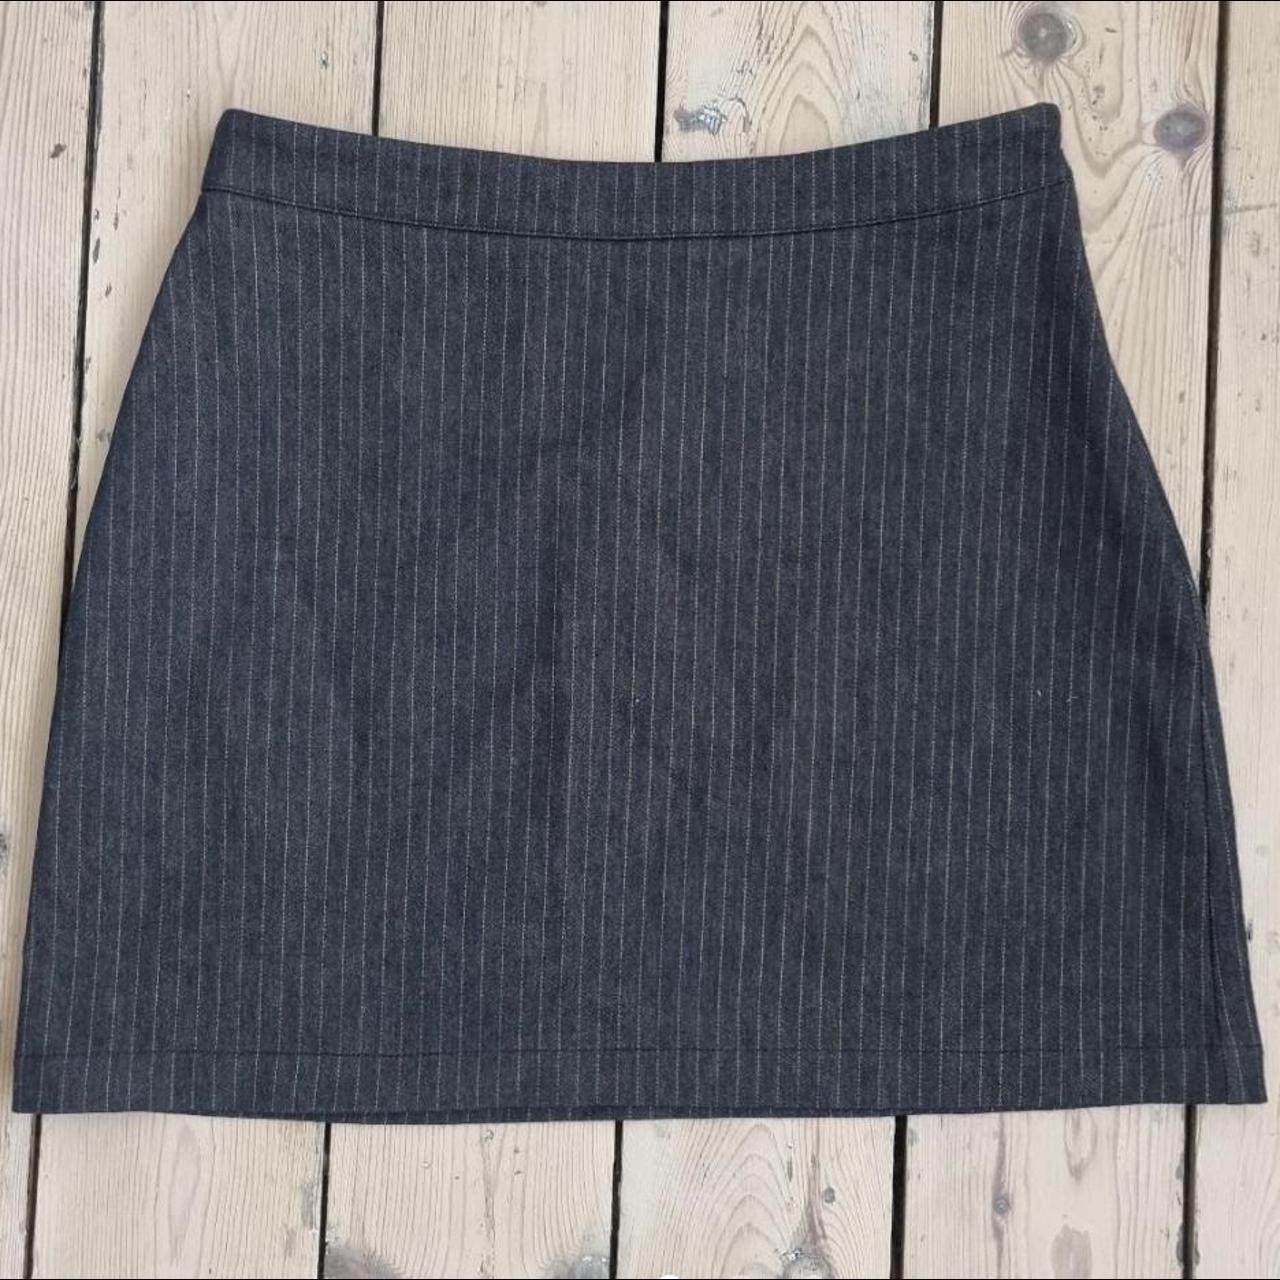 dark blue pinstripe mini skirt from Urban... - Depop